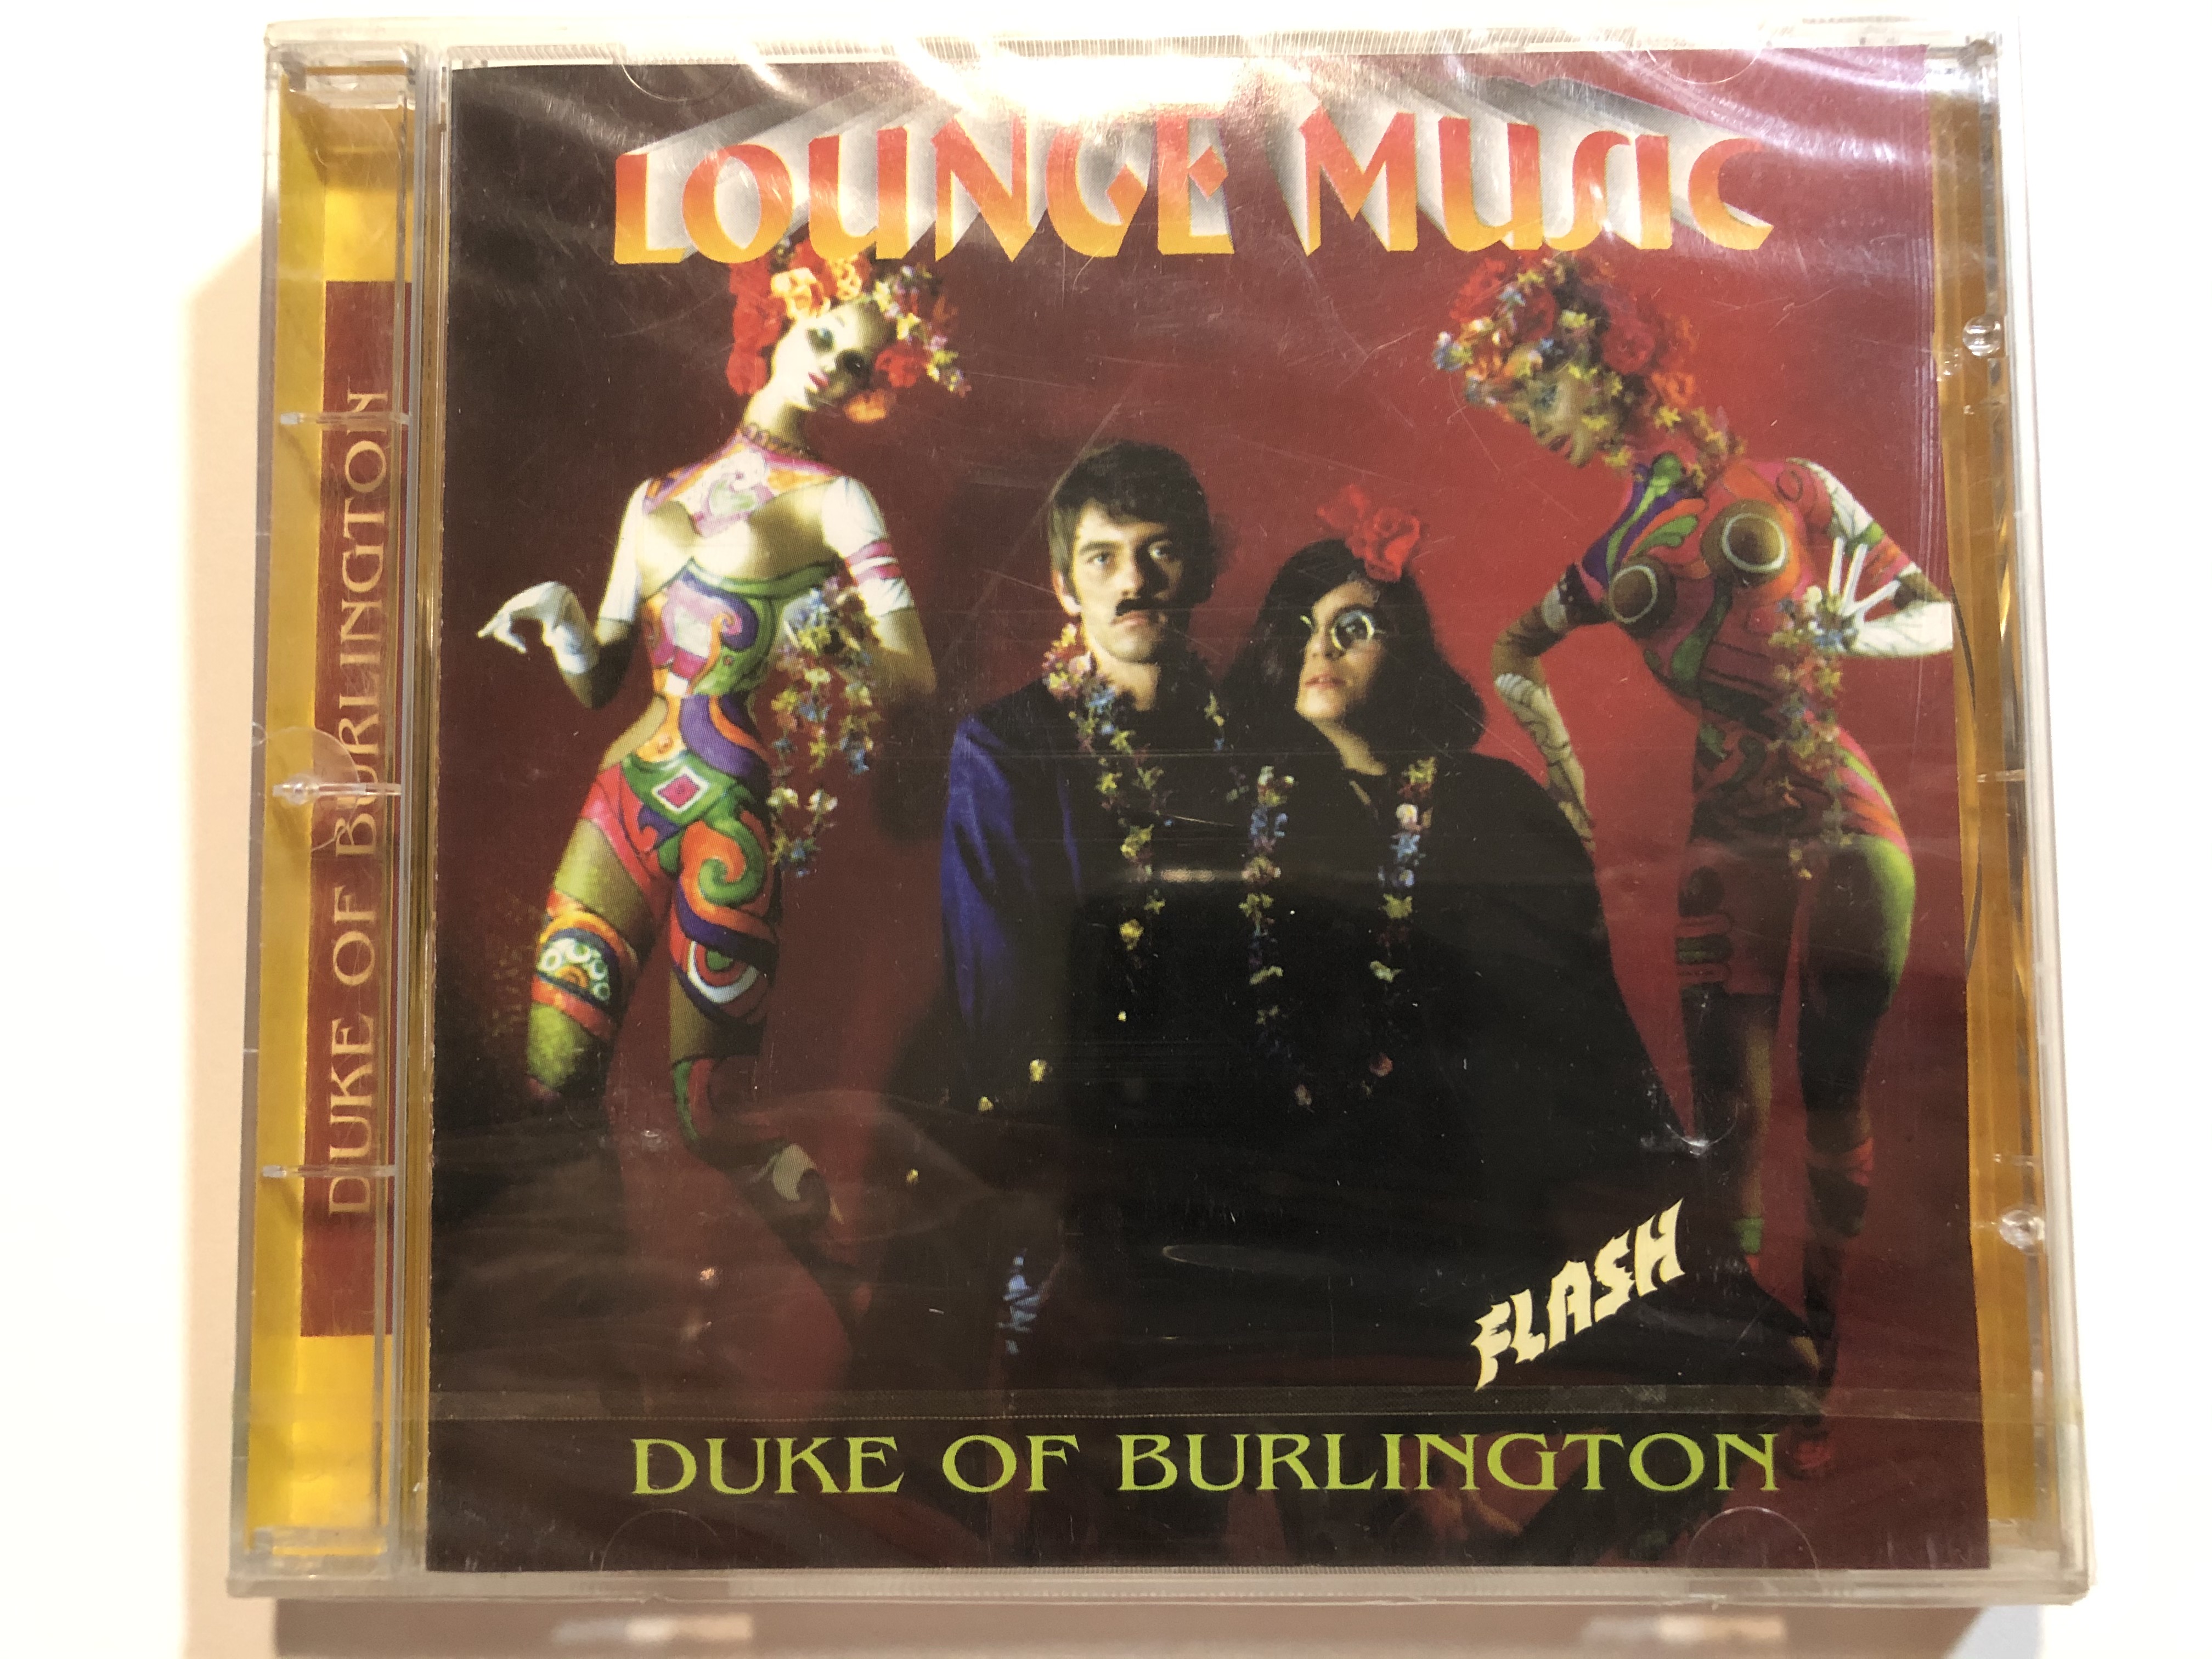 the-duke-of-burlington-flash-lounge-music-audio-cd-2002-cd-2805-1-.jpg